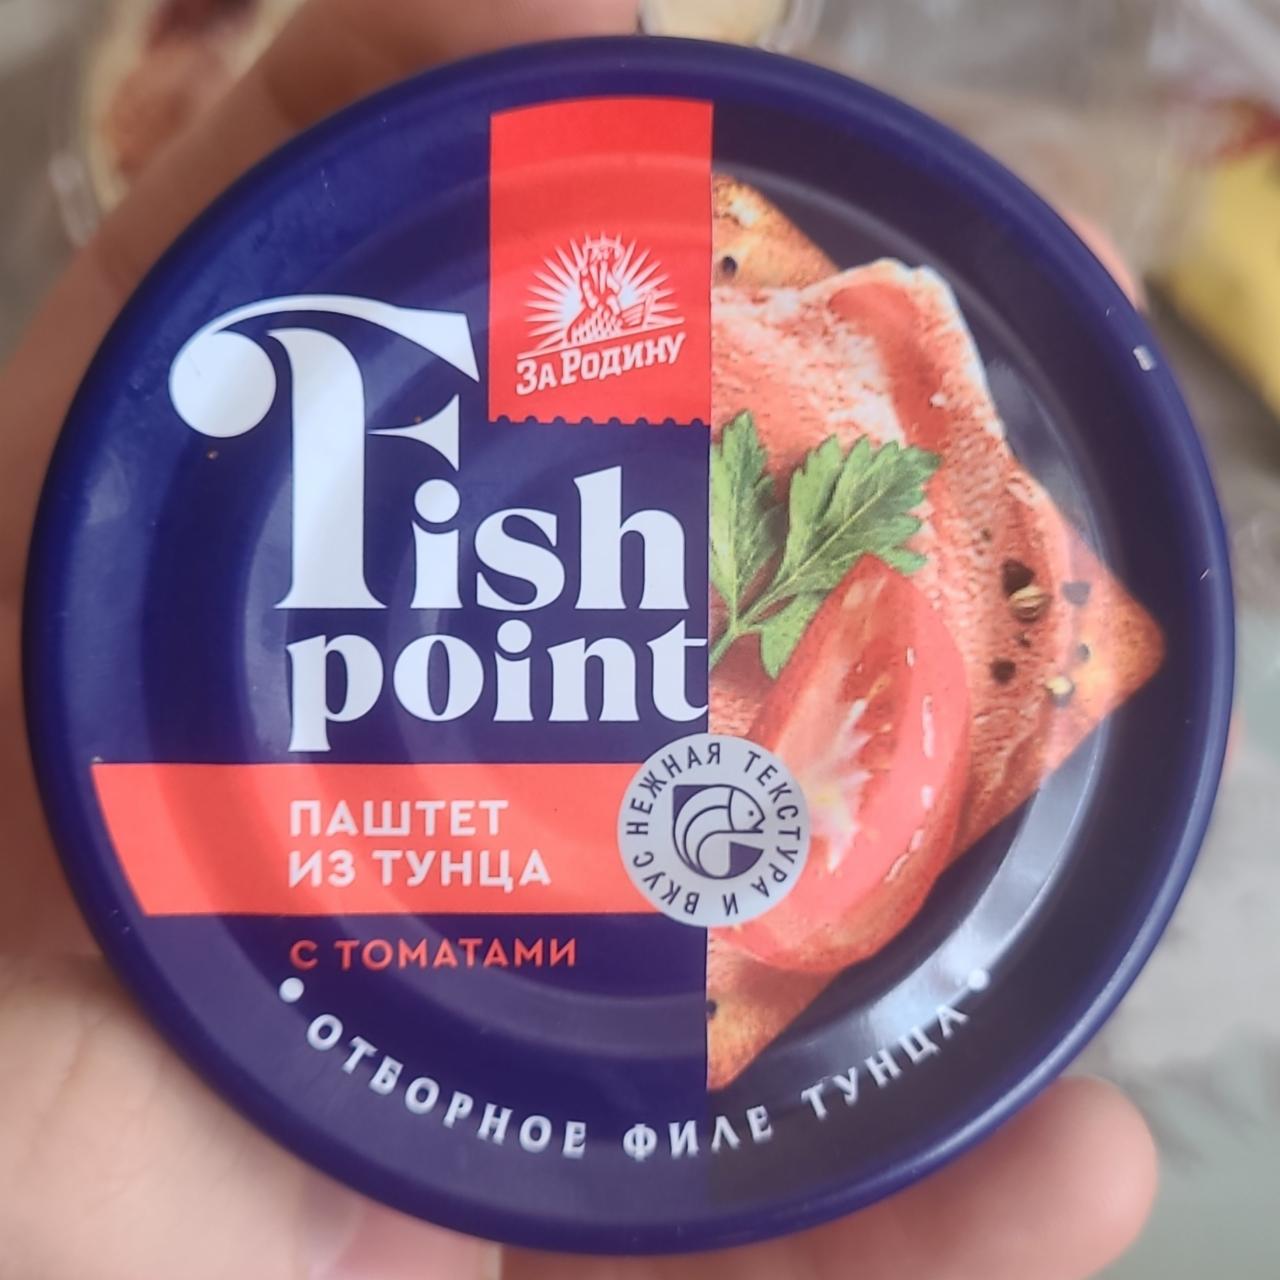 Фото - Паштет из тунца с томатами Fish point За Родину